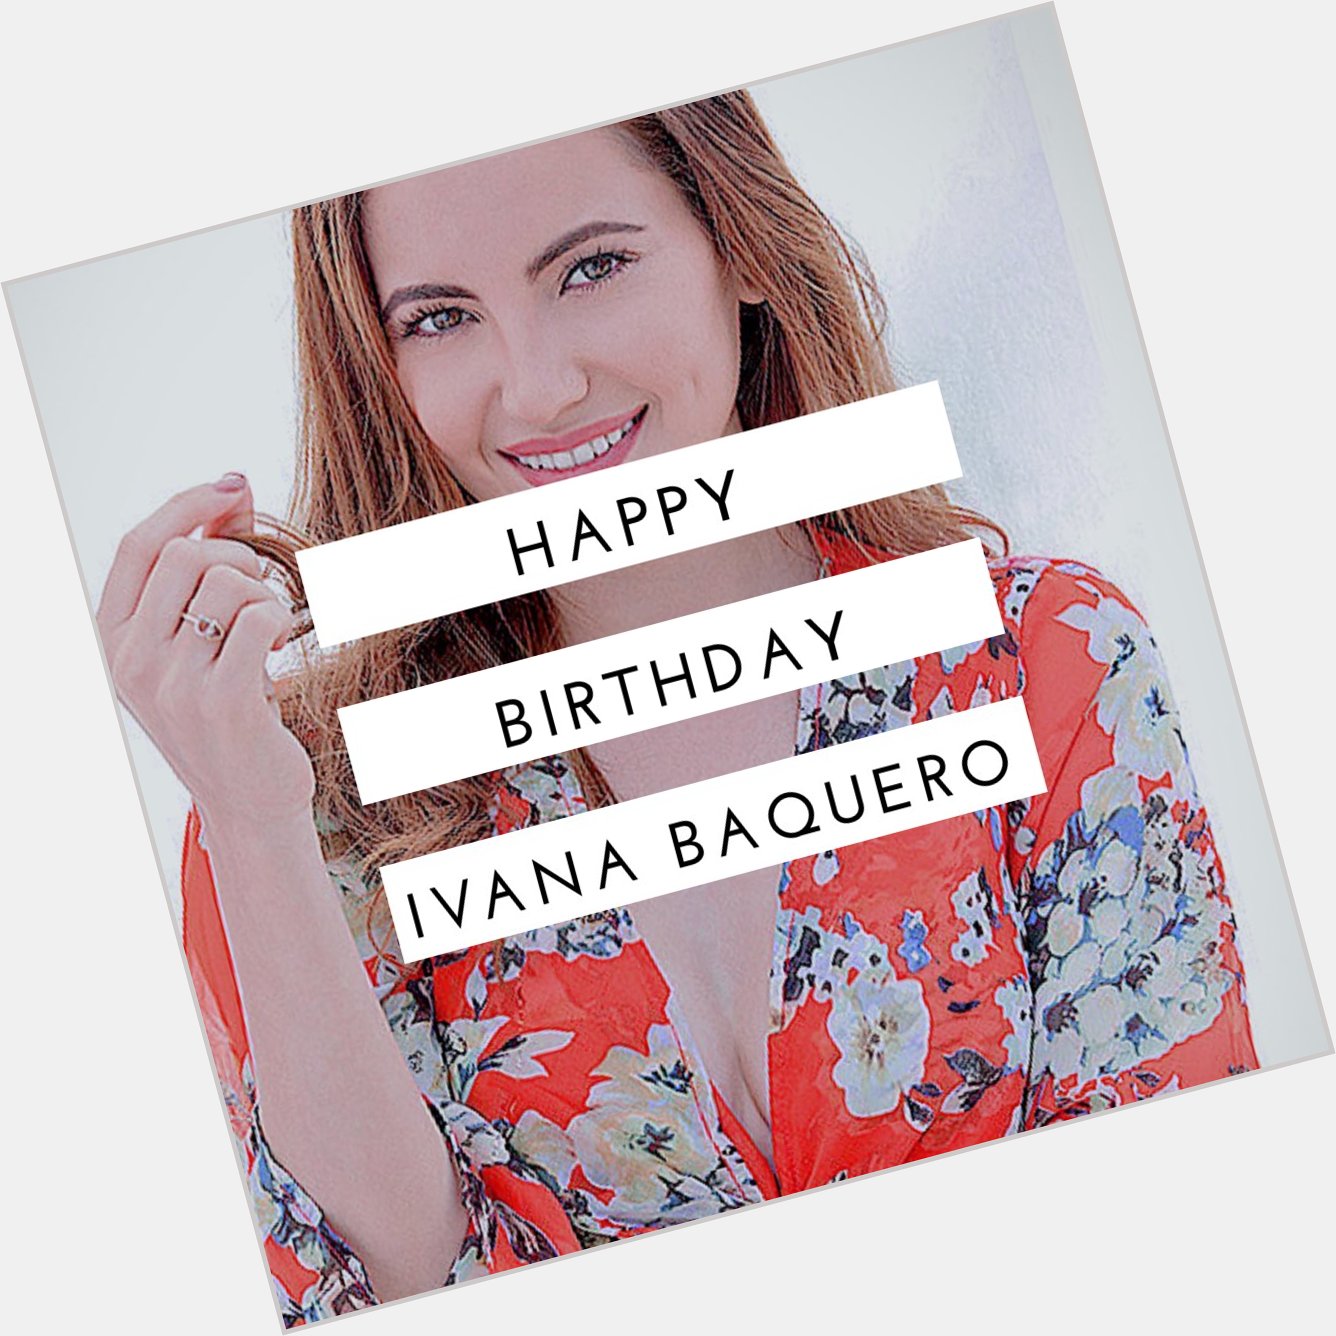 Happy birthday to our beloved Ivana Baquero   